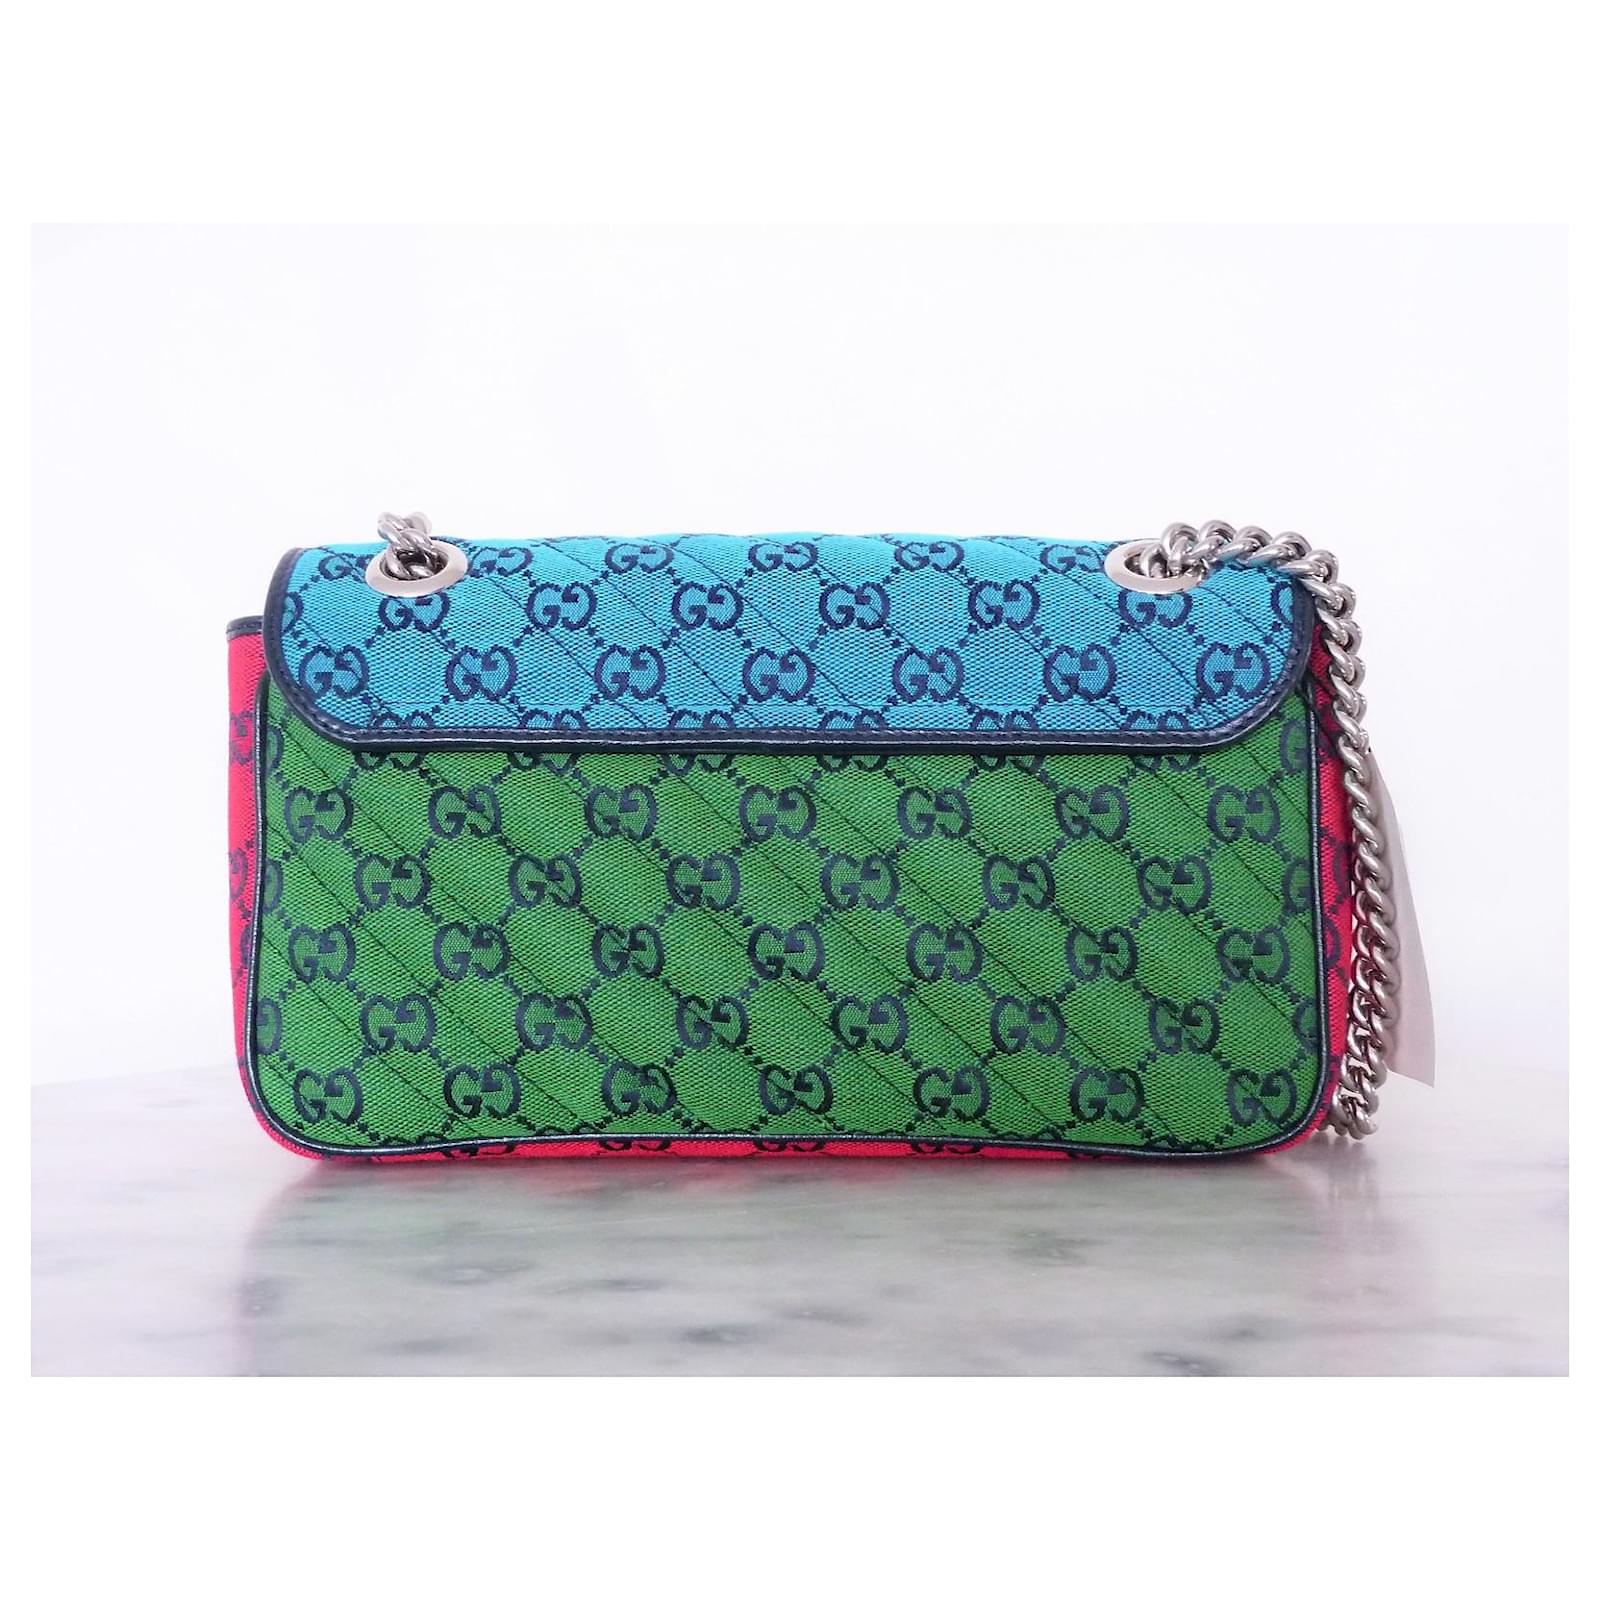 Gucci - Authenticated Marmont Handbag - Cloth Multicolour Plain for Women, Very Good Condition